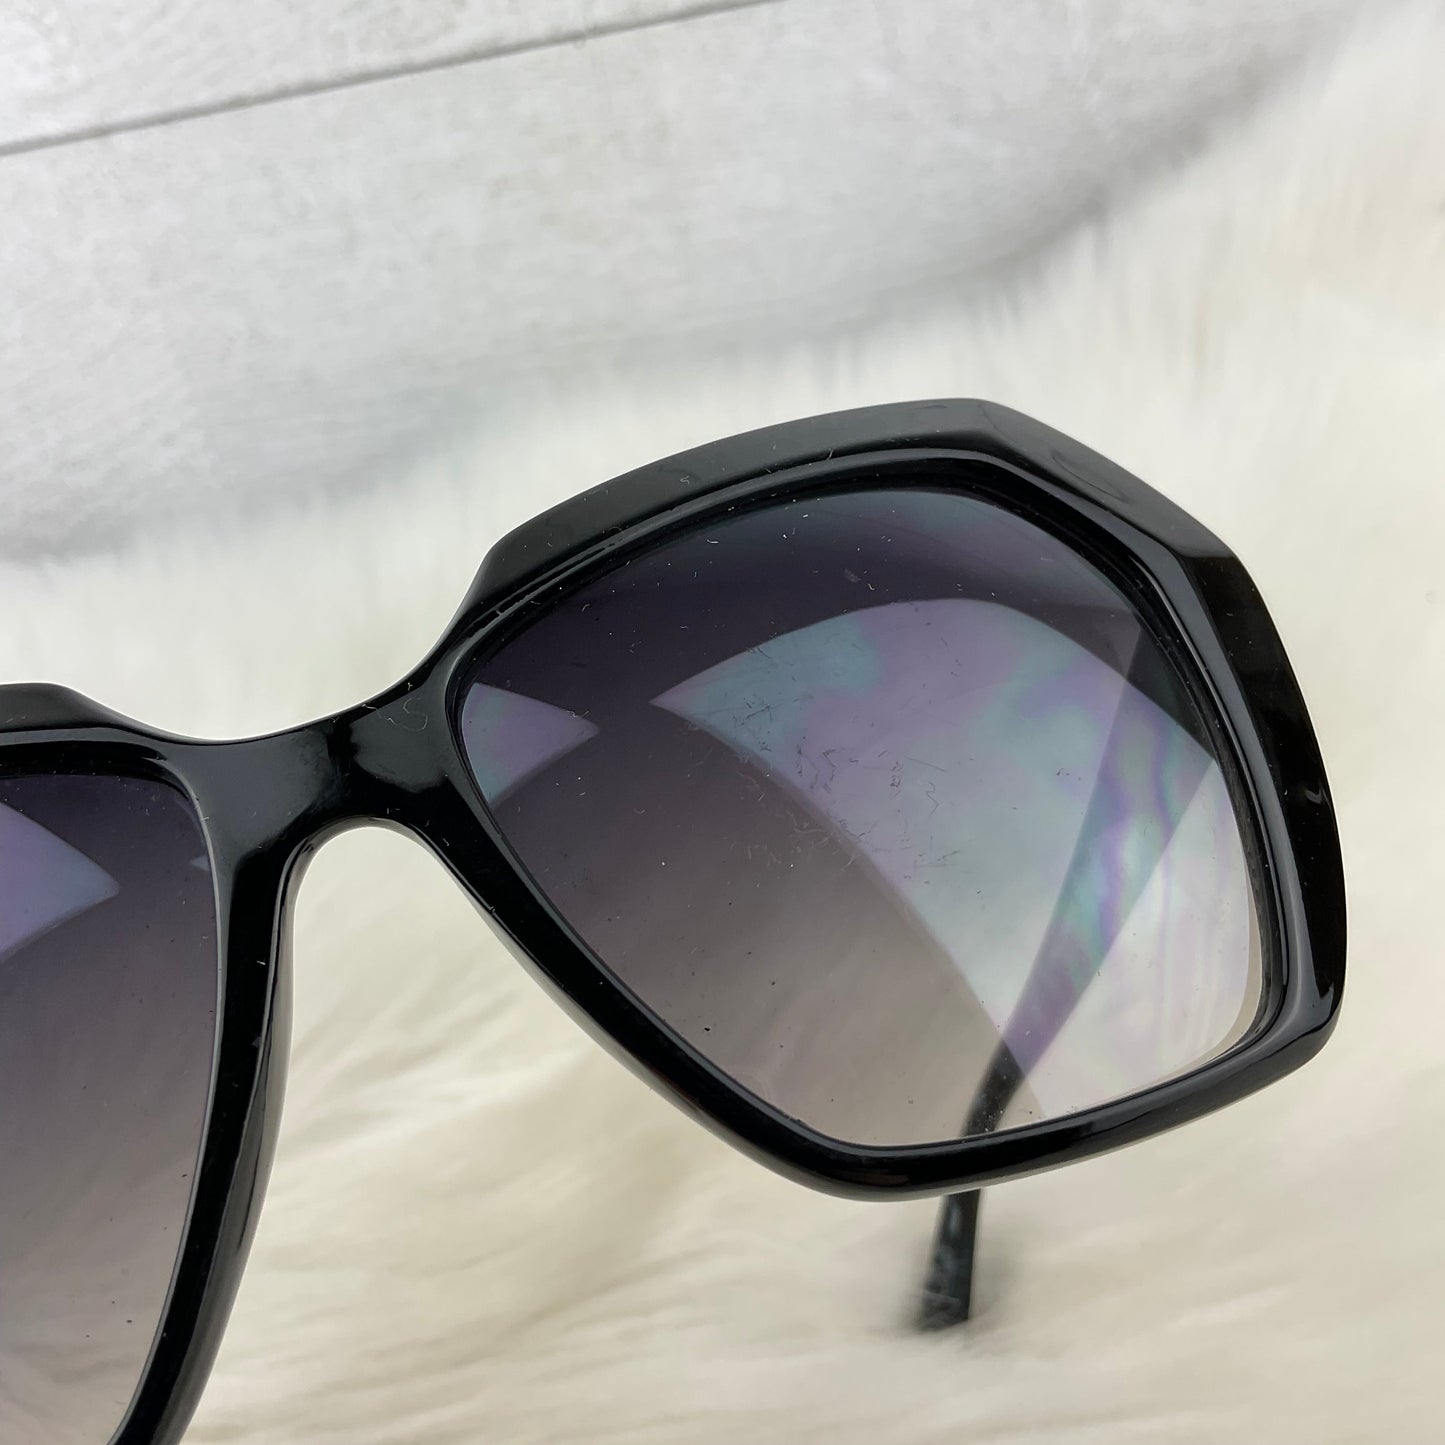 Sunglasses Designer By Sam Edelman